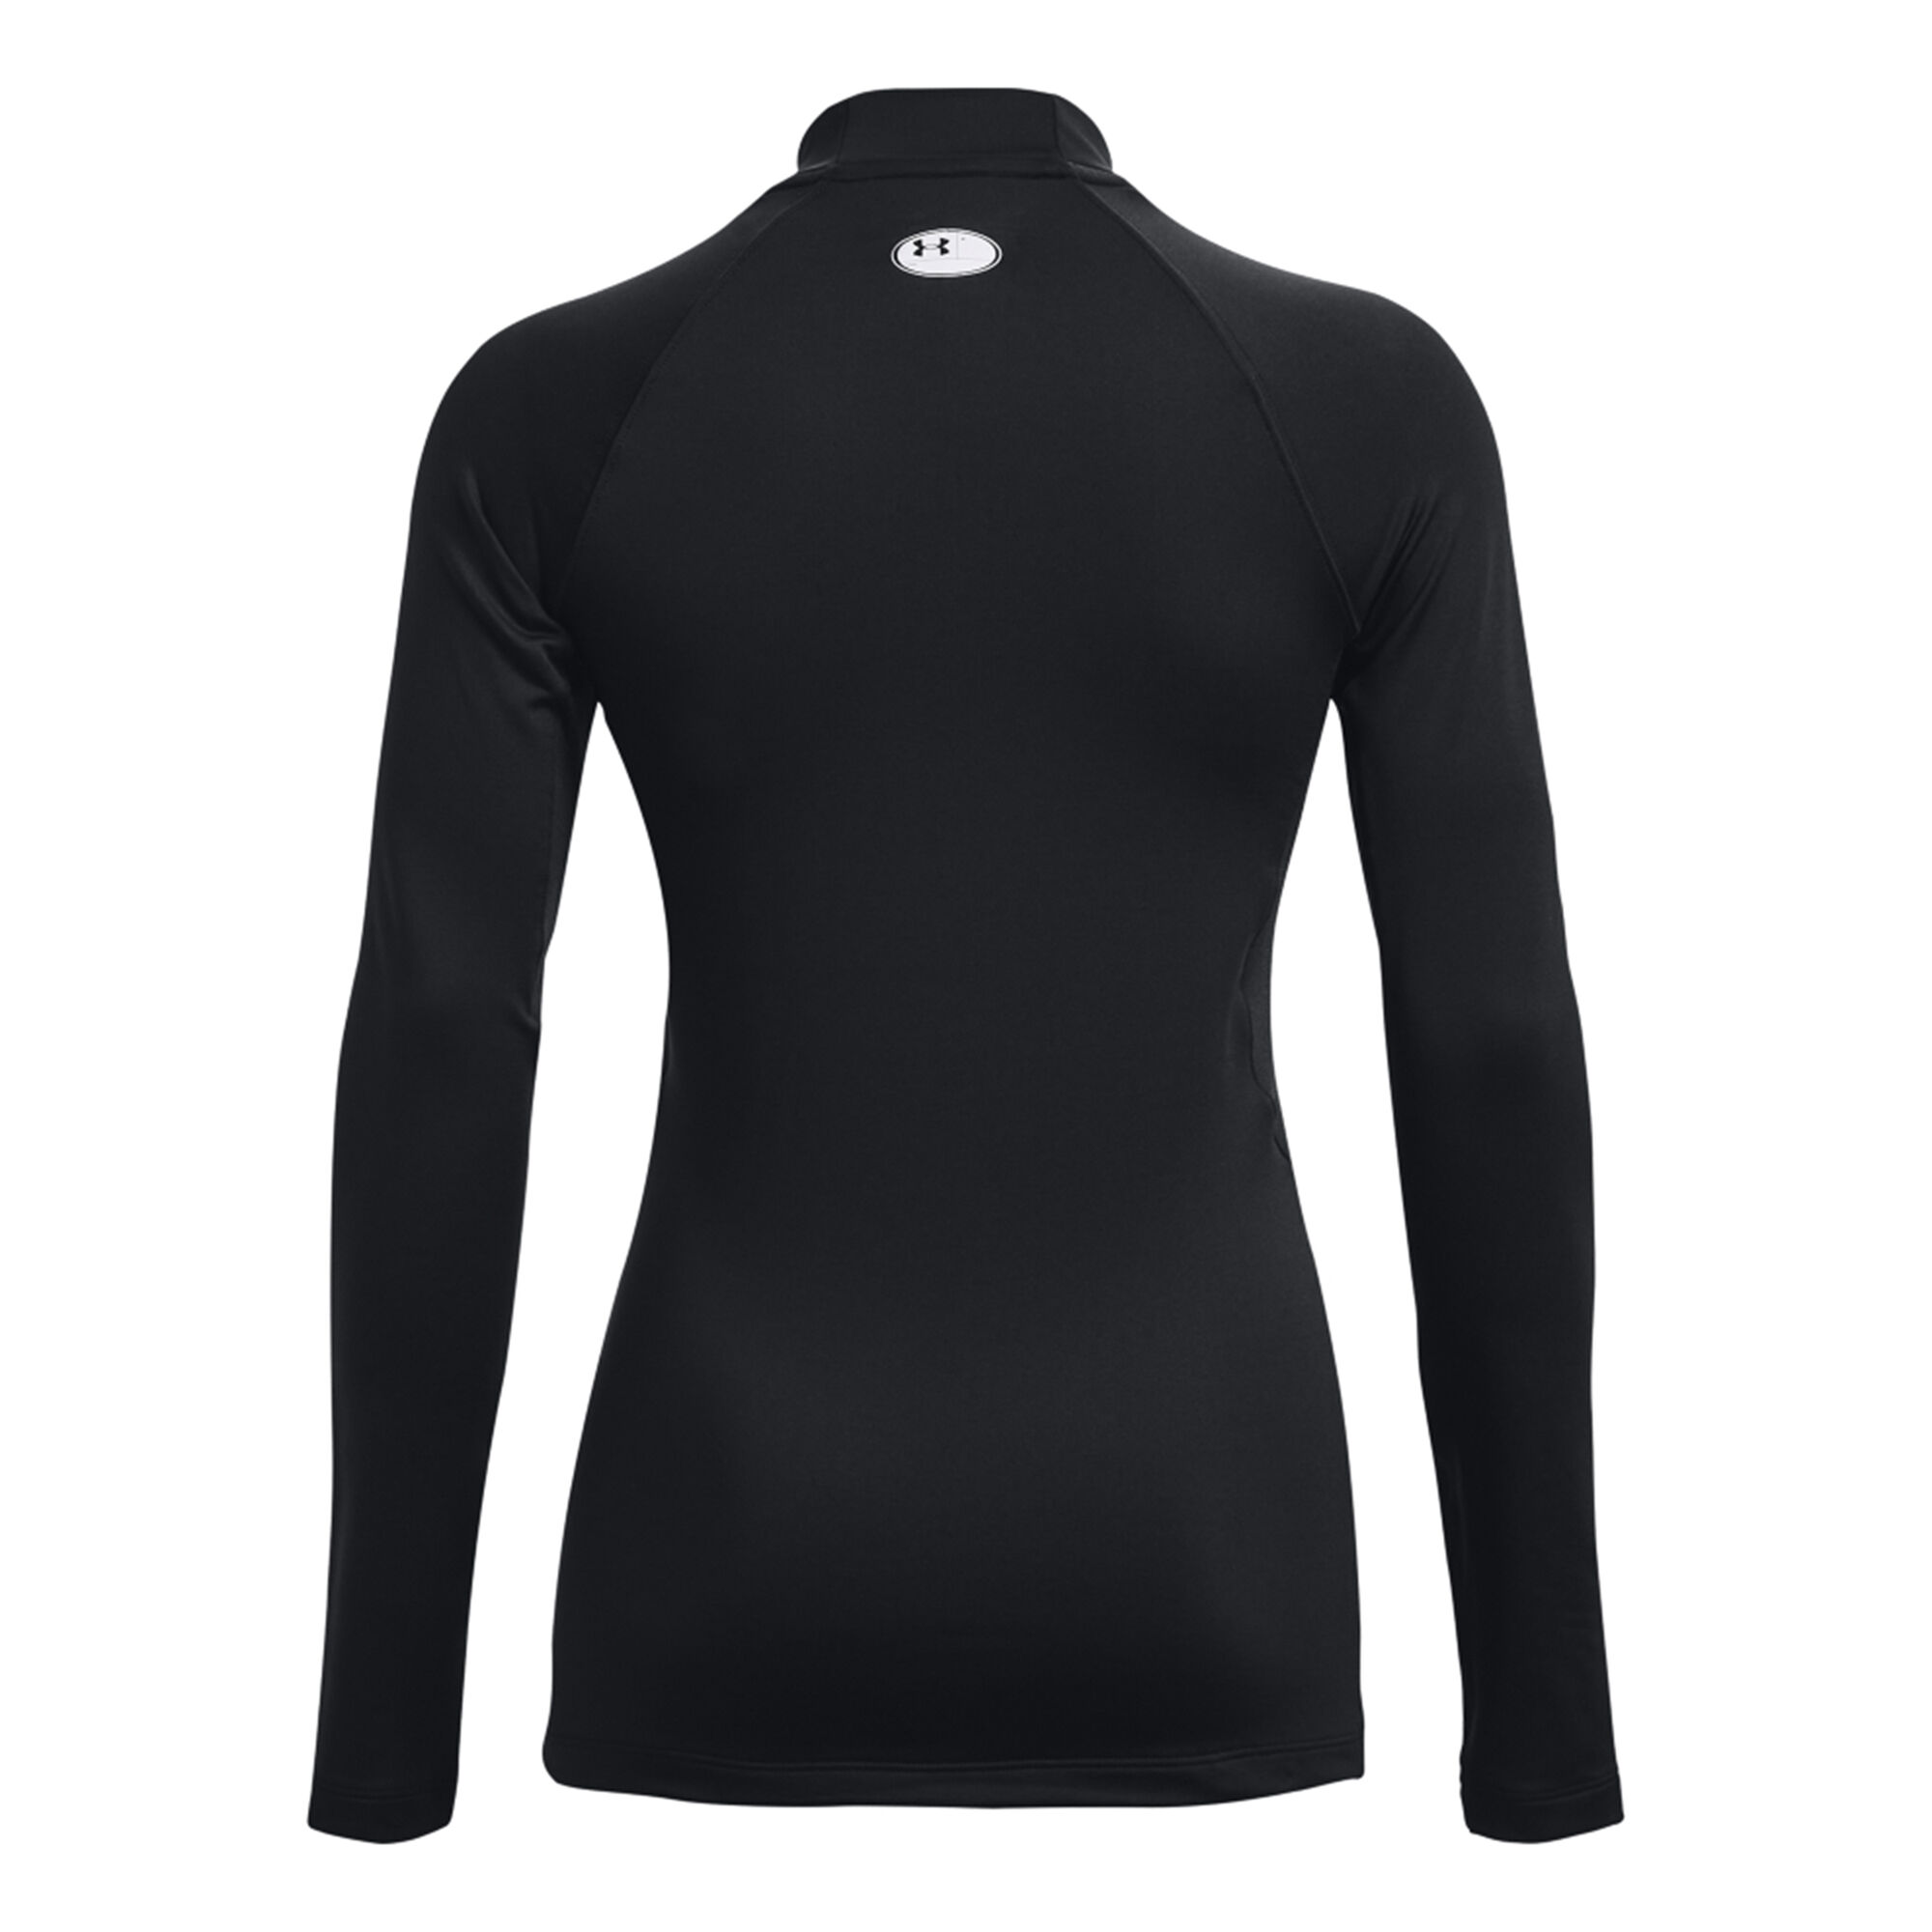 Under Armour Women's Sporty Long-sleeve Tops Sale black Size XL